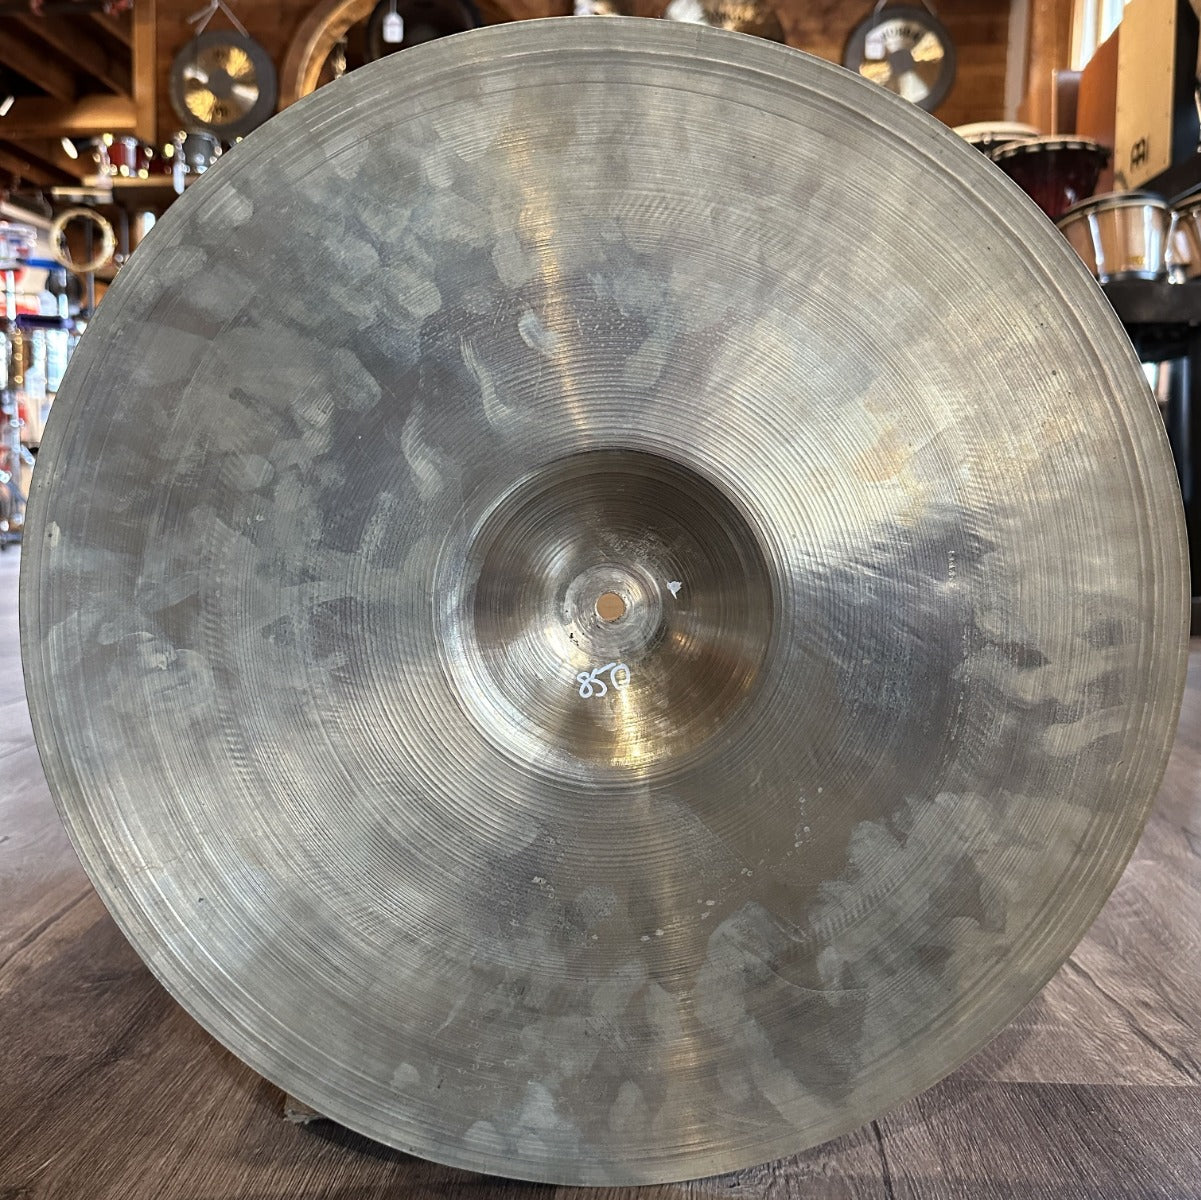 Used Vintage Alejian (Zildjian) Crash Cymbal 17 - 850 grams